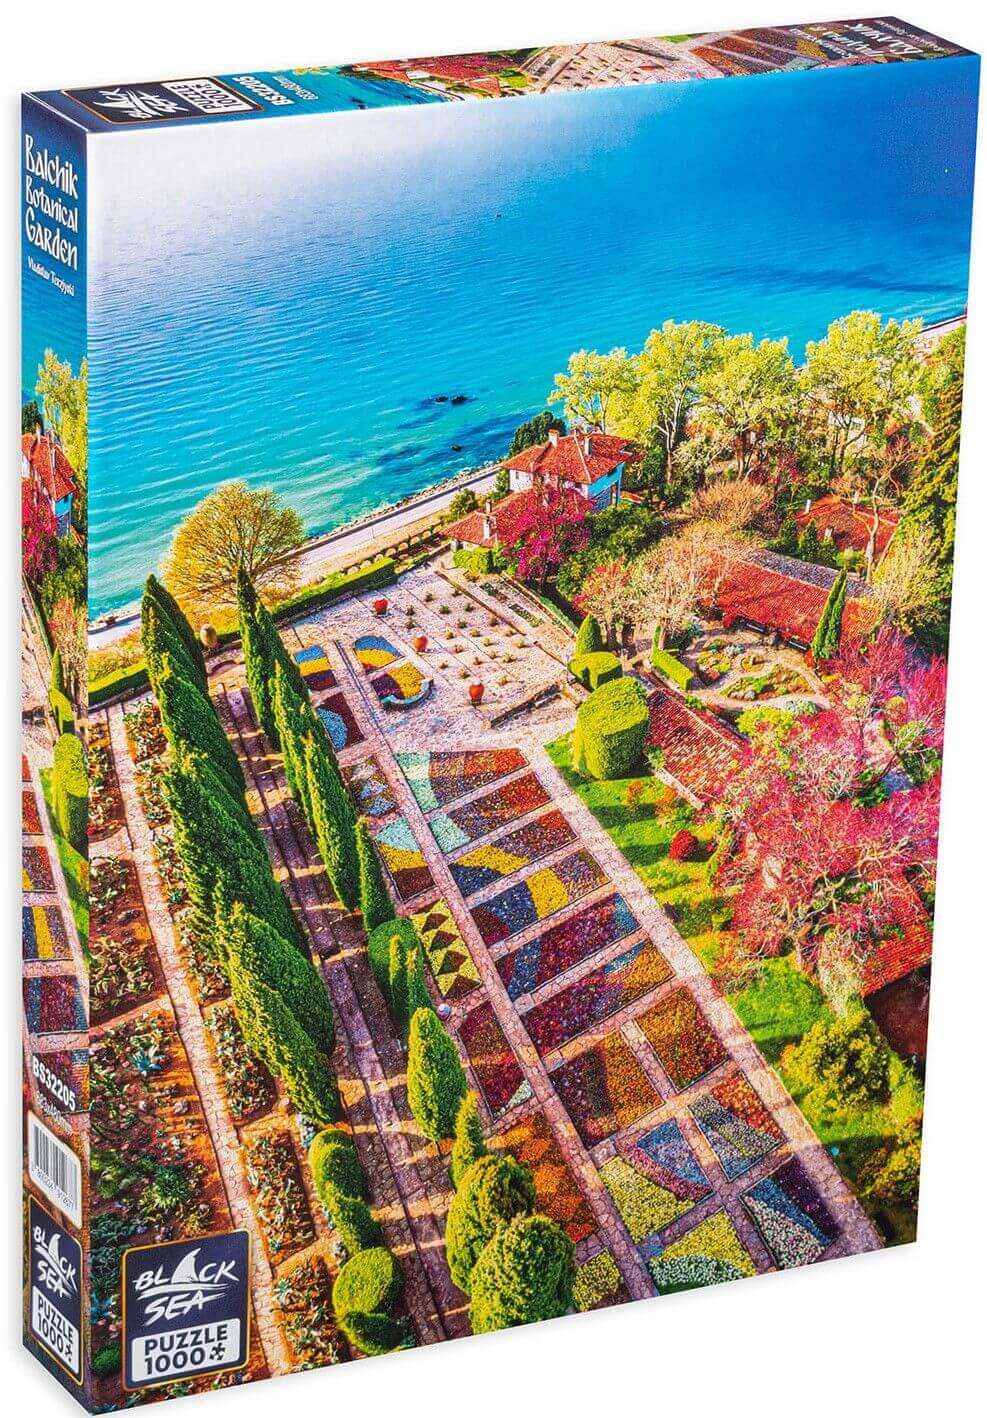 Puzzle Black Sea Premium 1000 pieces - Balchik Botanical Garden